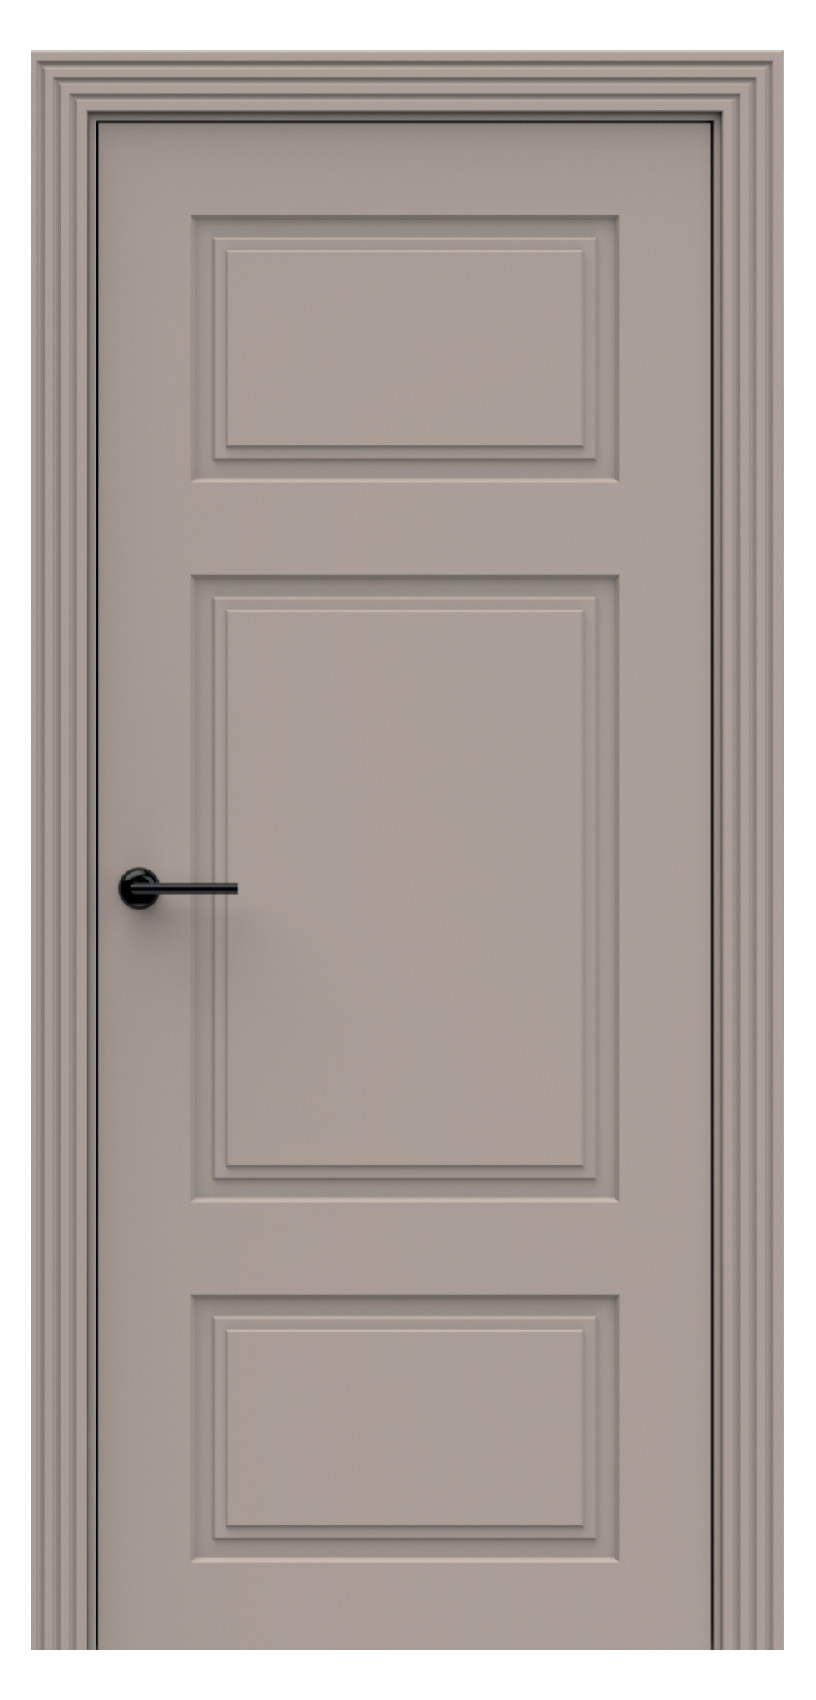 Questdoors Межкомнатная дверь QI13, арт. 17974 - фото №1